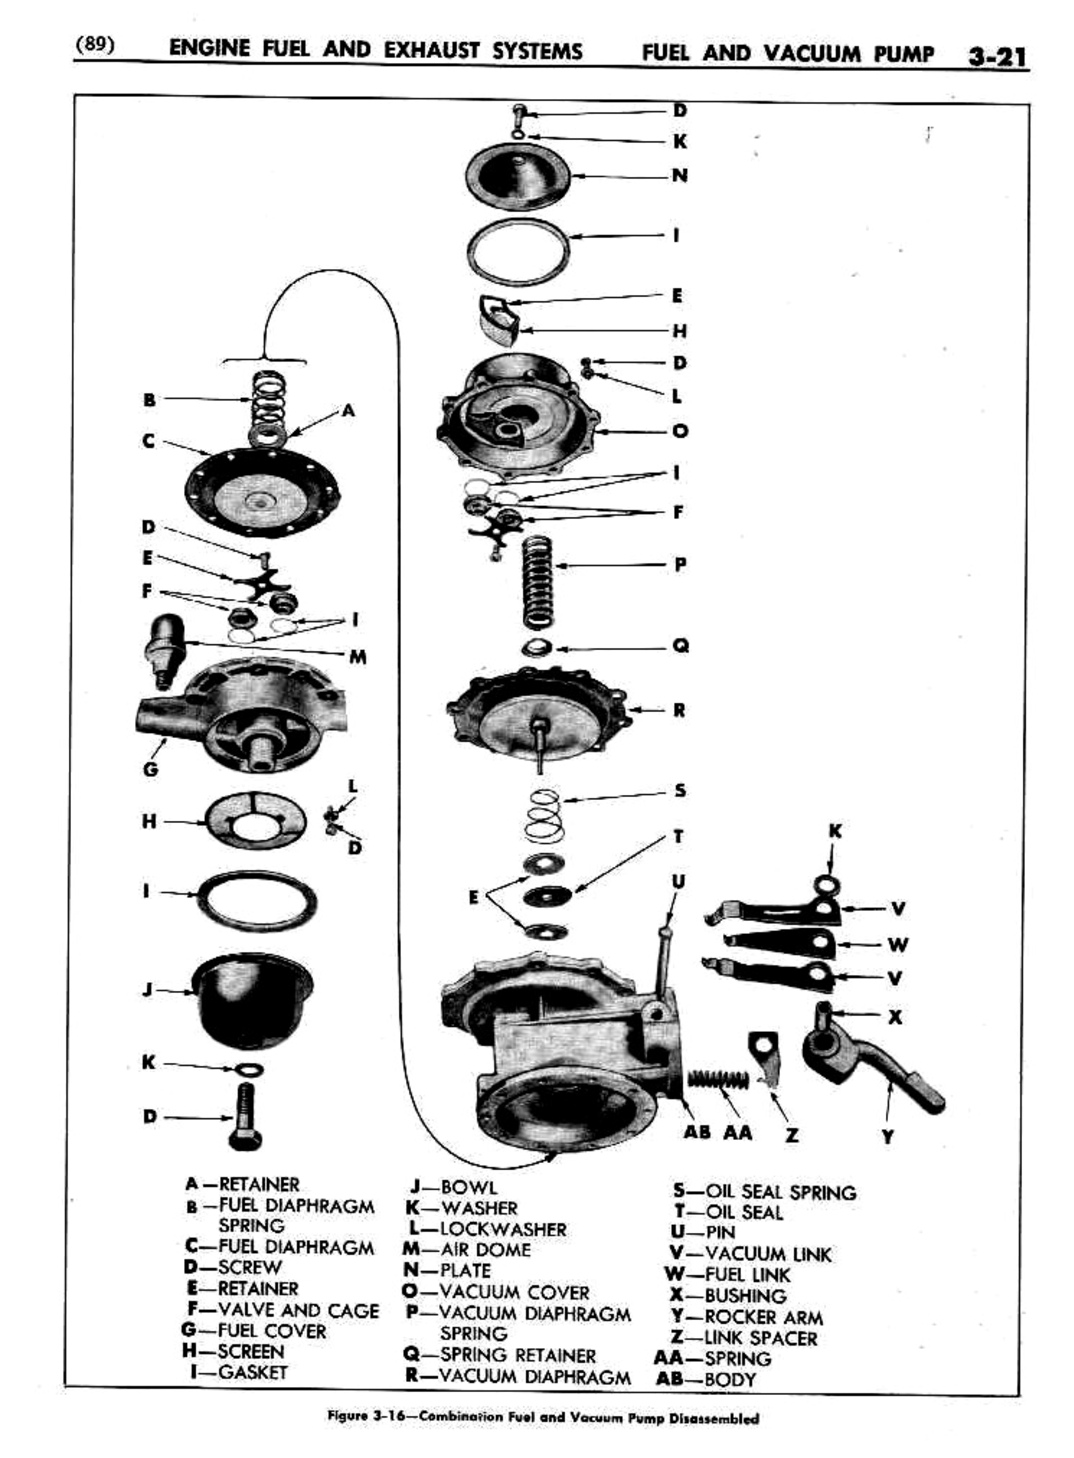 n_04 1951 Buick Shop Manual - Engine Fuel & Exhaust-021-021.jpg